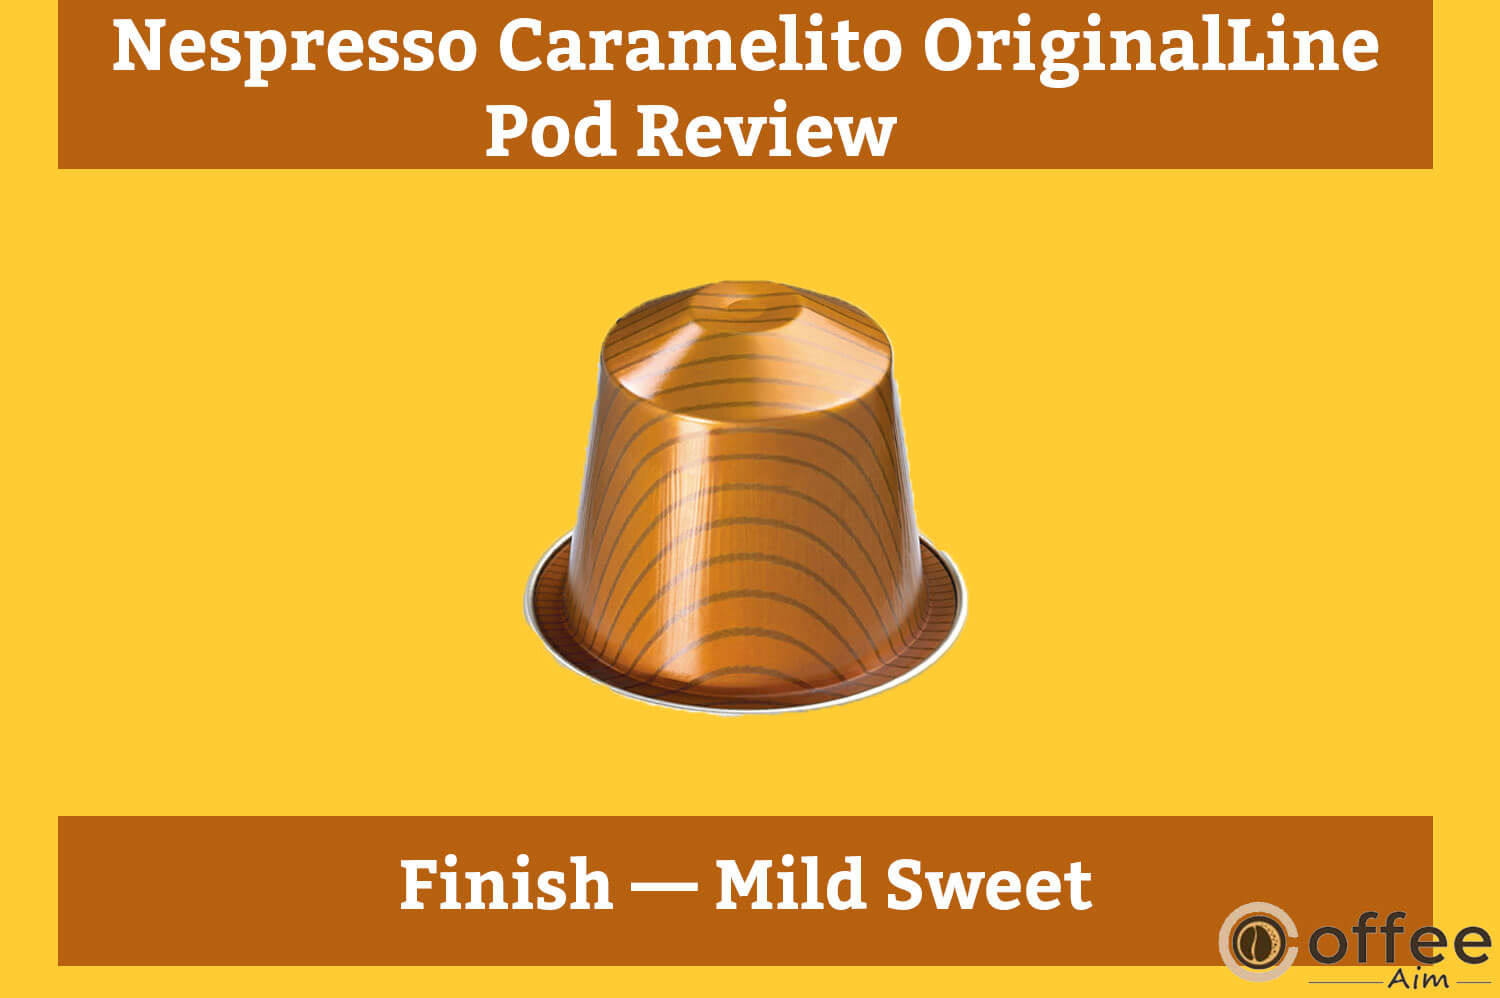 The image depicts the "Nespresso Caramelito OriginalLine Pod" finish, discussed in the article "Nespresso Caramelito OriginalLine Pod Review."